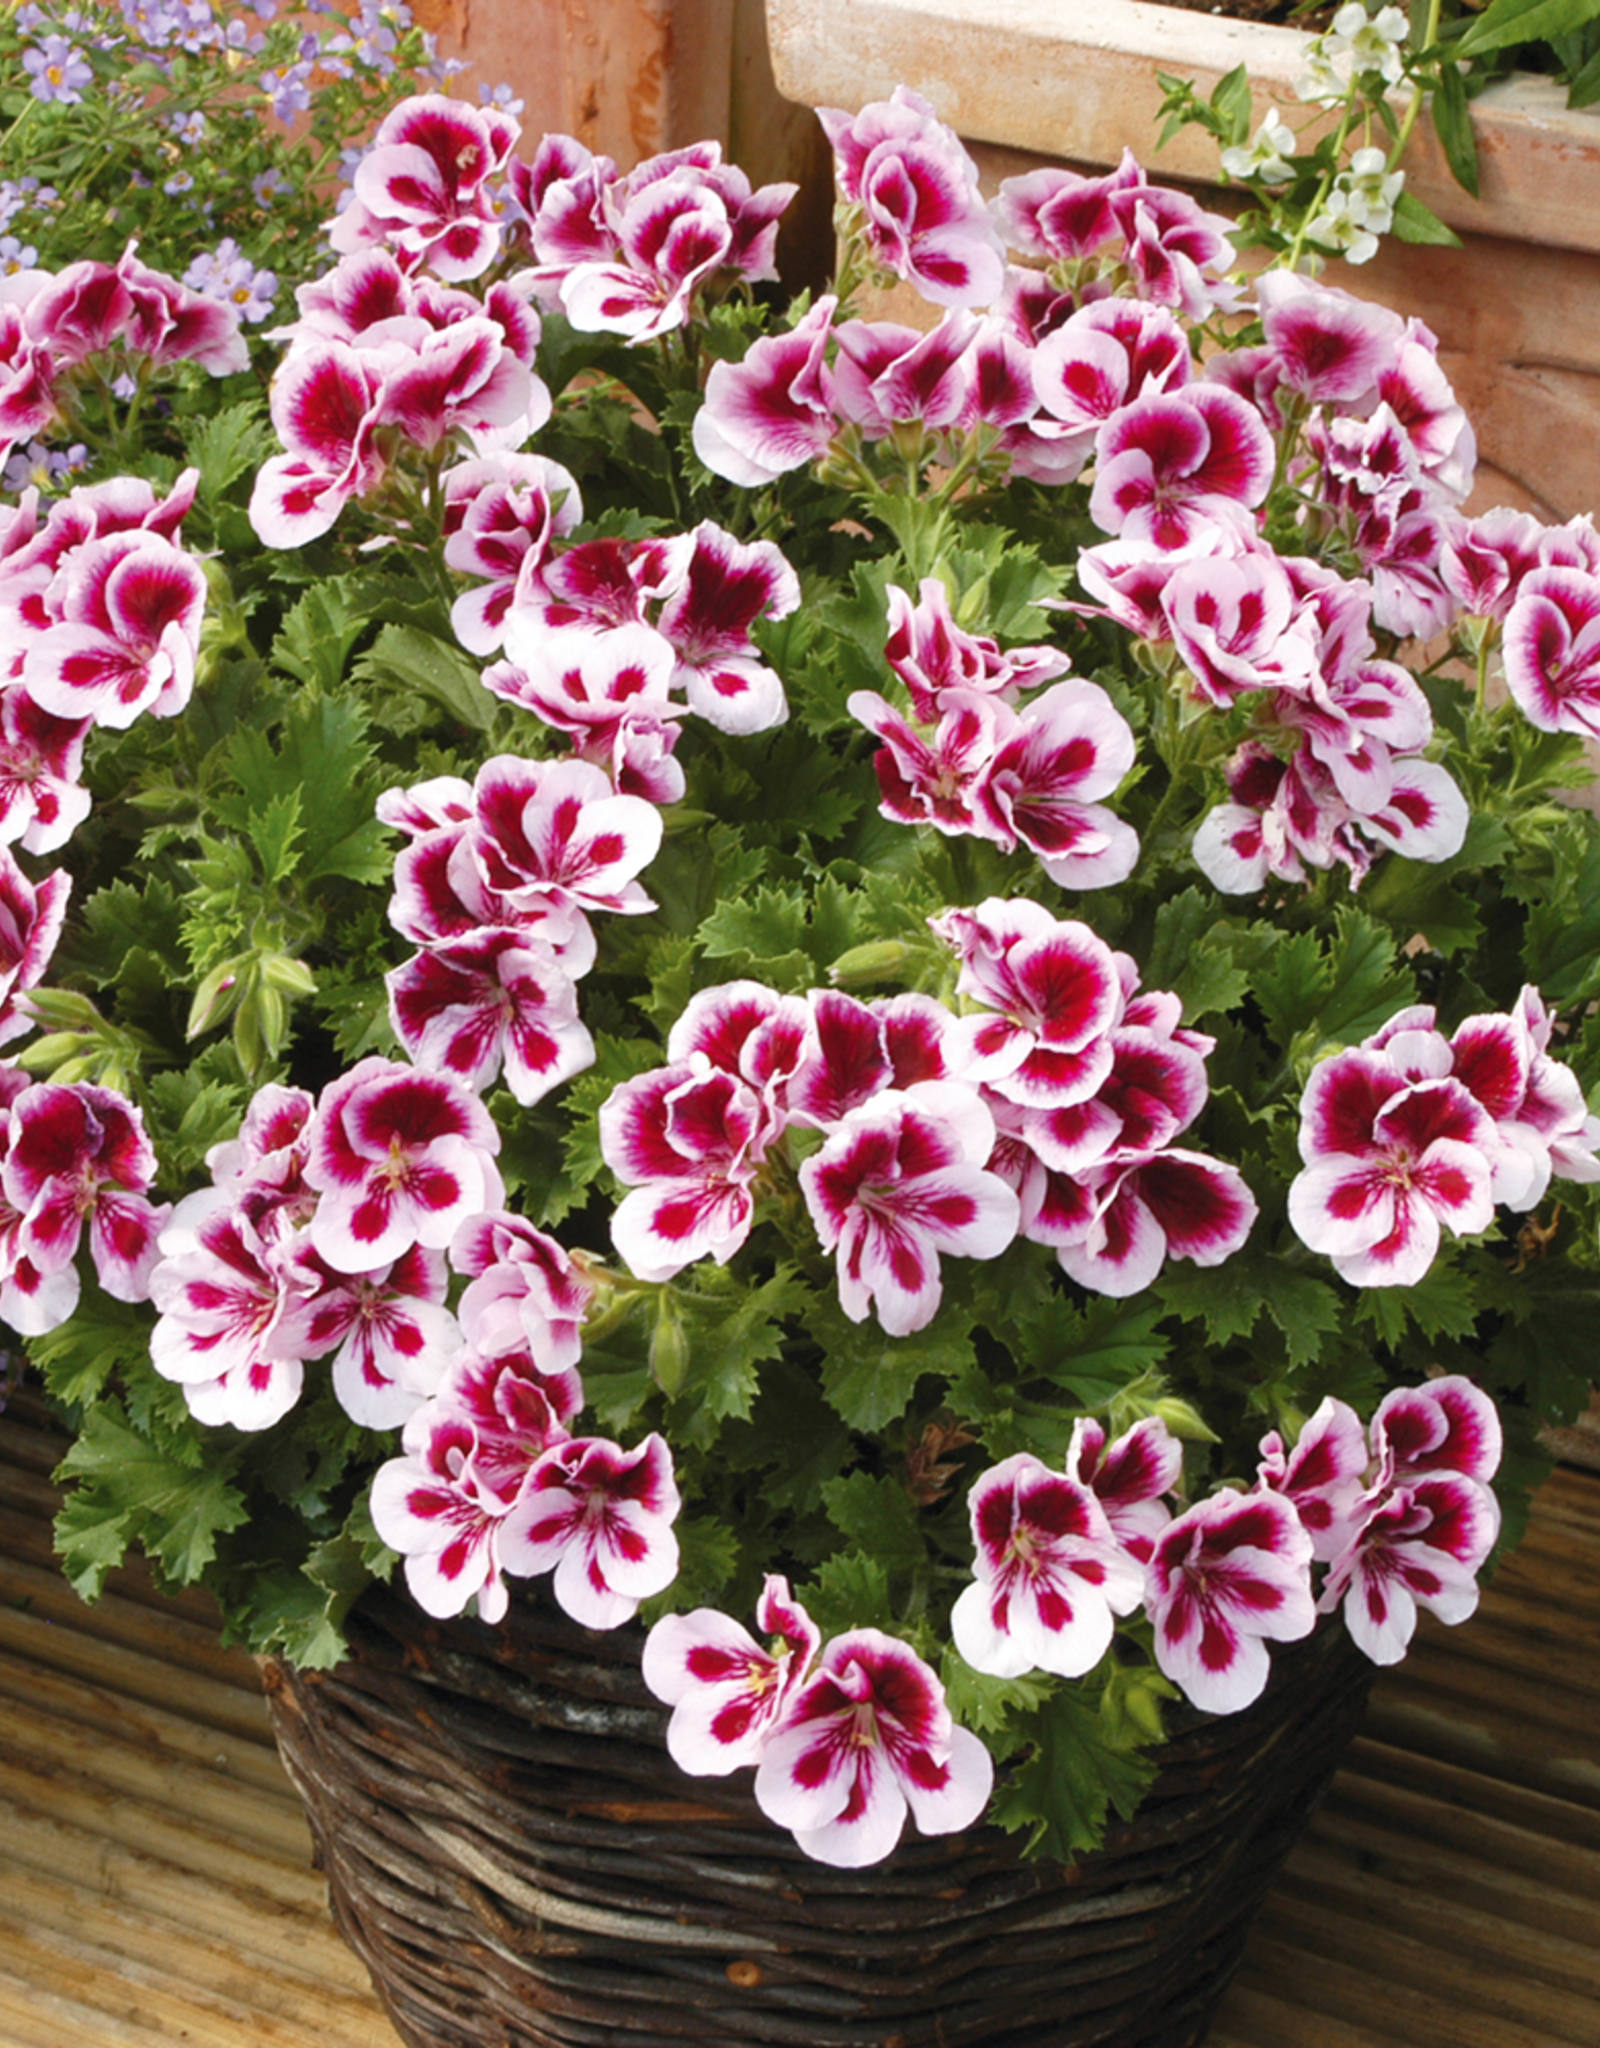 Pelargonium Candy Flowers® Bi-color 5.5 inch